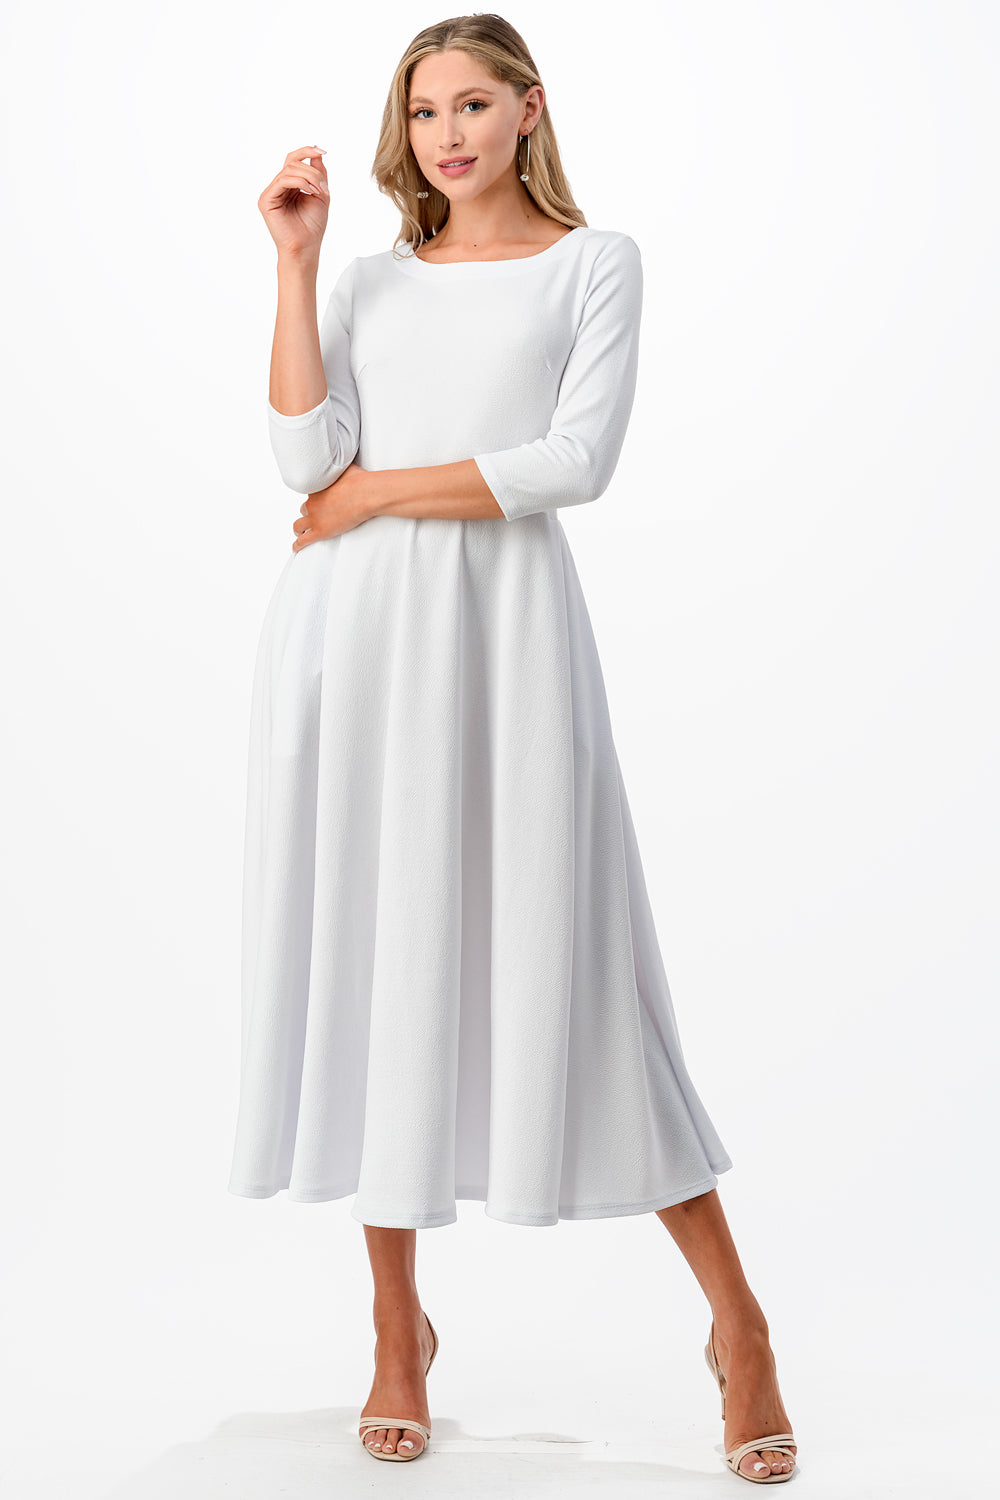 Modest Midi Dress with Sleeves, Pockets, Modest Christmas Dresses, Mod ...